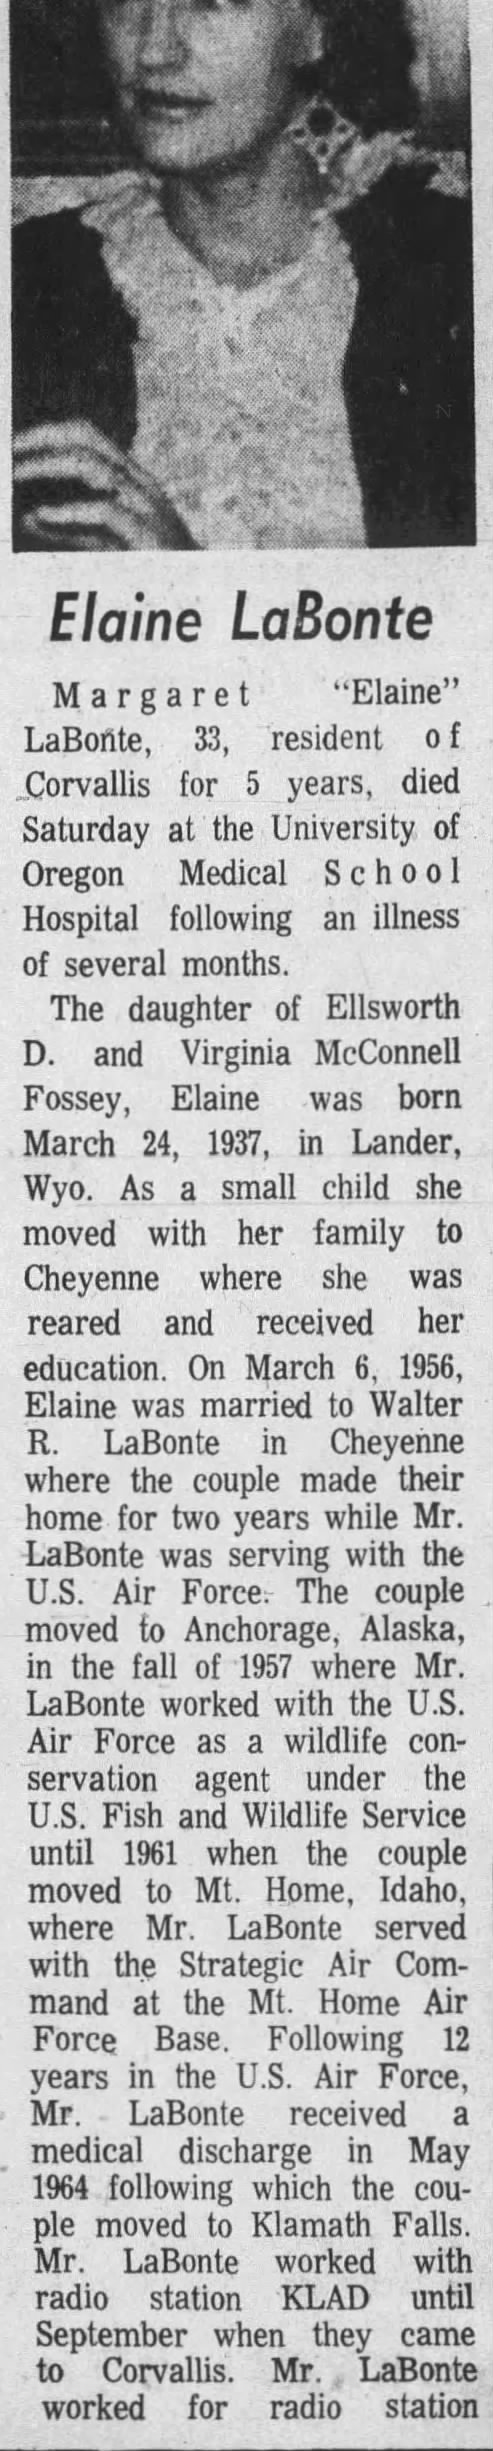 Obituary for Elaine LaBonte